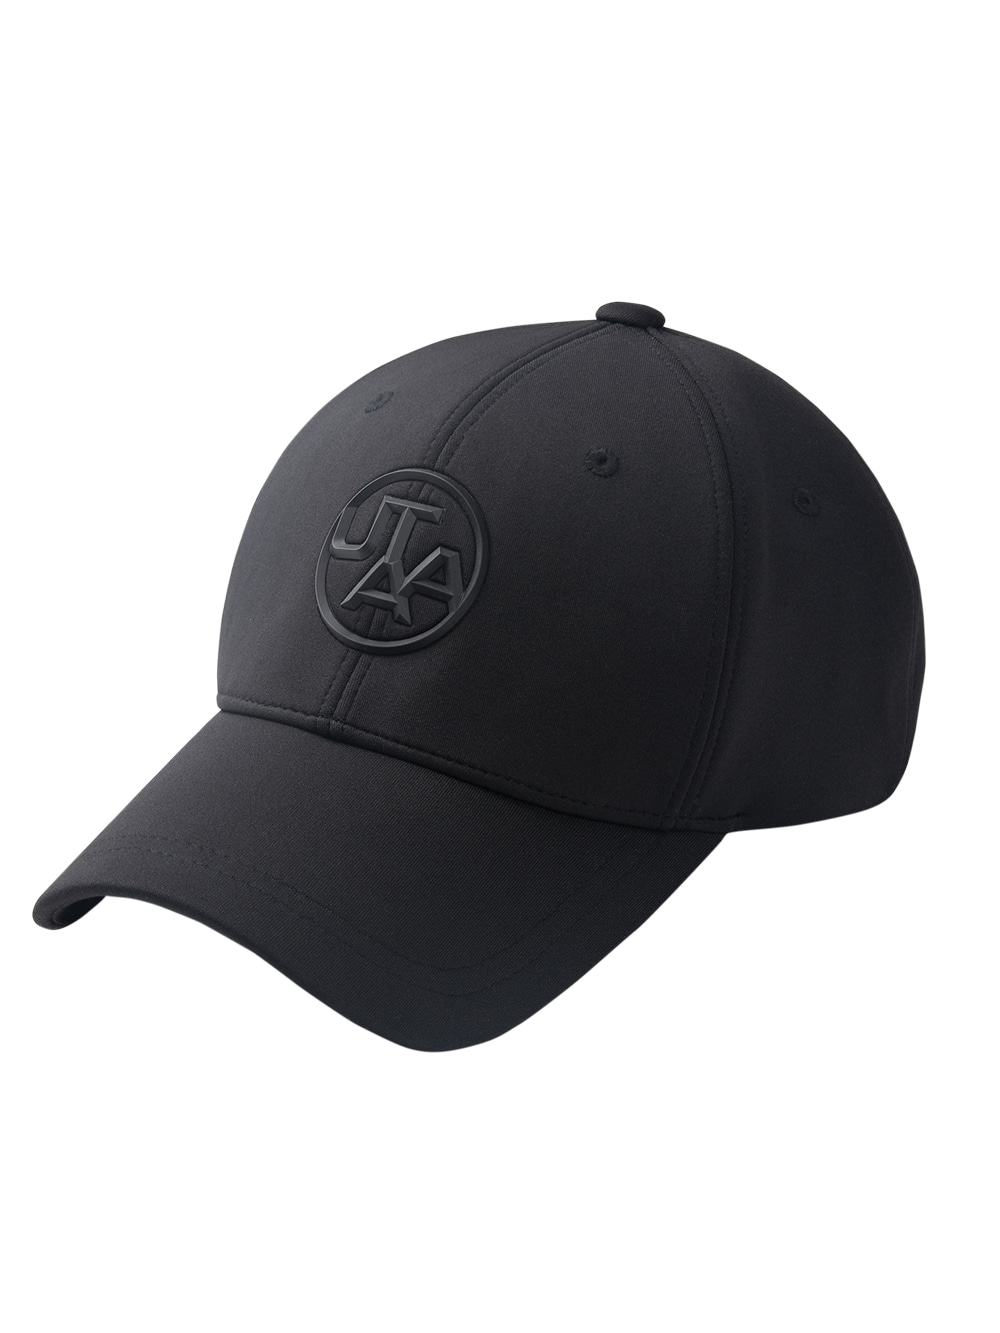 UTAA Figure Symbol Cushion Golf cap : Black (UD0GCU530BK)